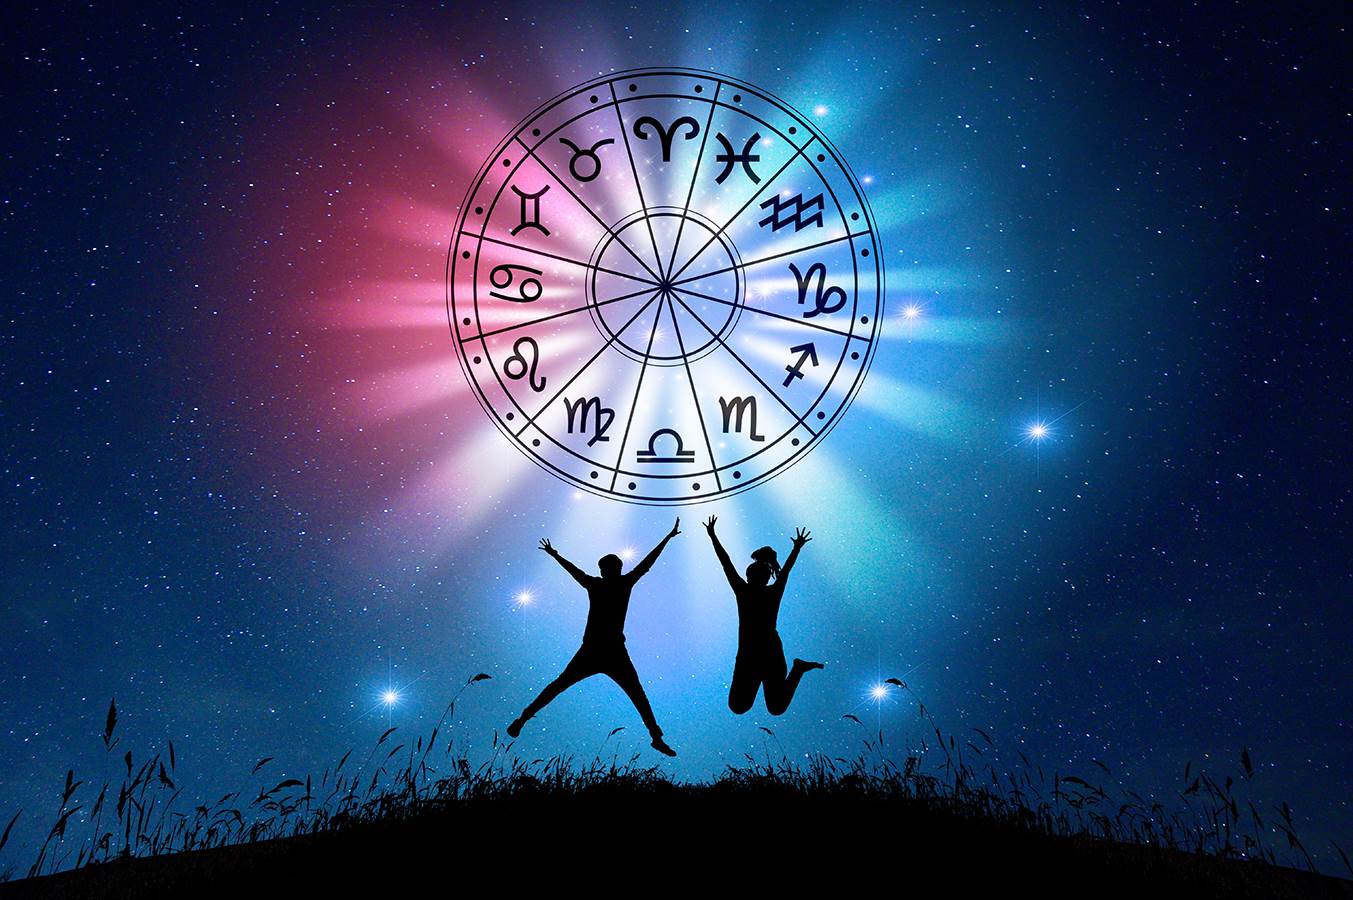  dnevni horoskop za 10. decembar 